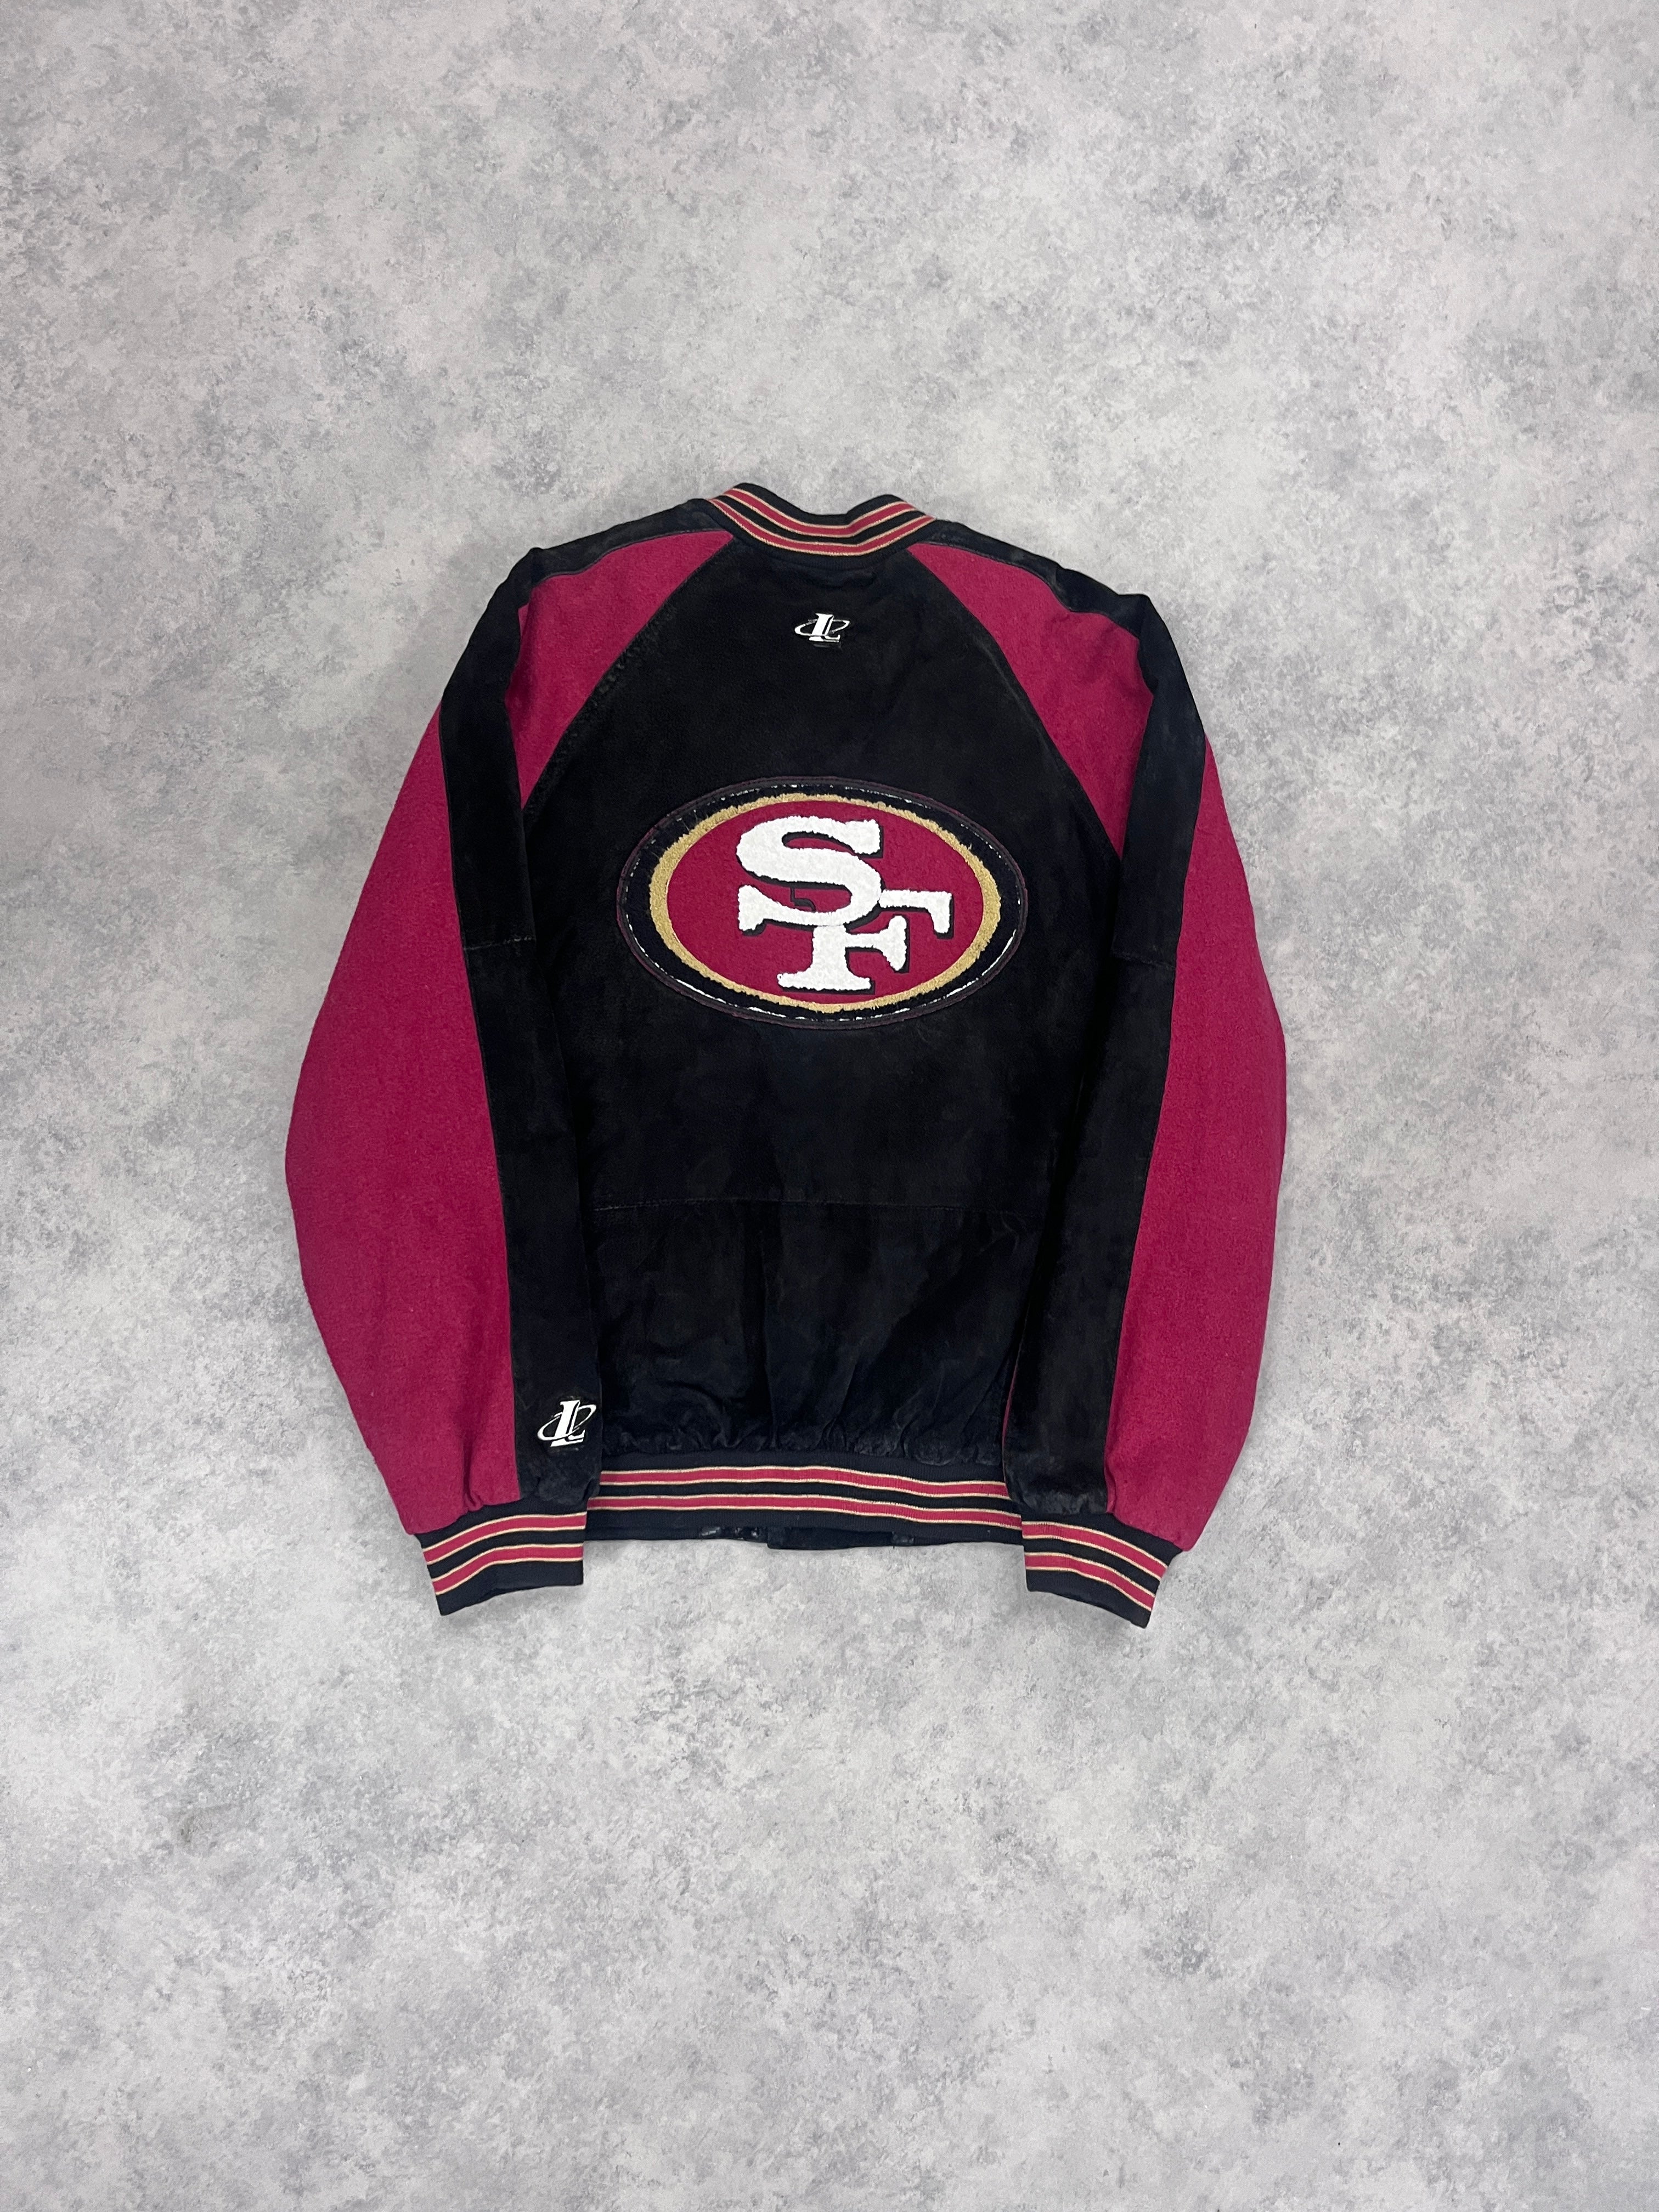 Vintage NFL 49ers Varsity Jacket Red // Large - RHAGHOUSE VINTAGE